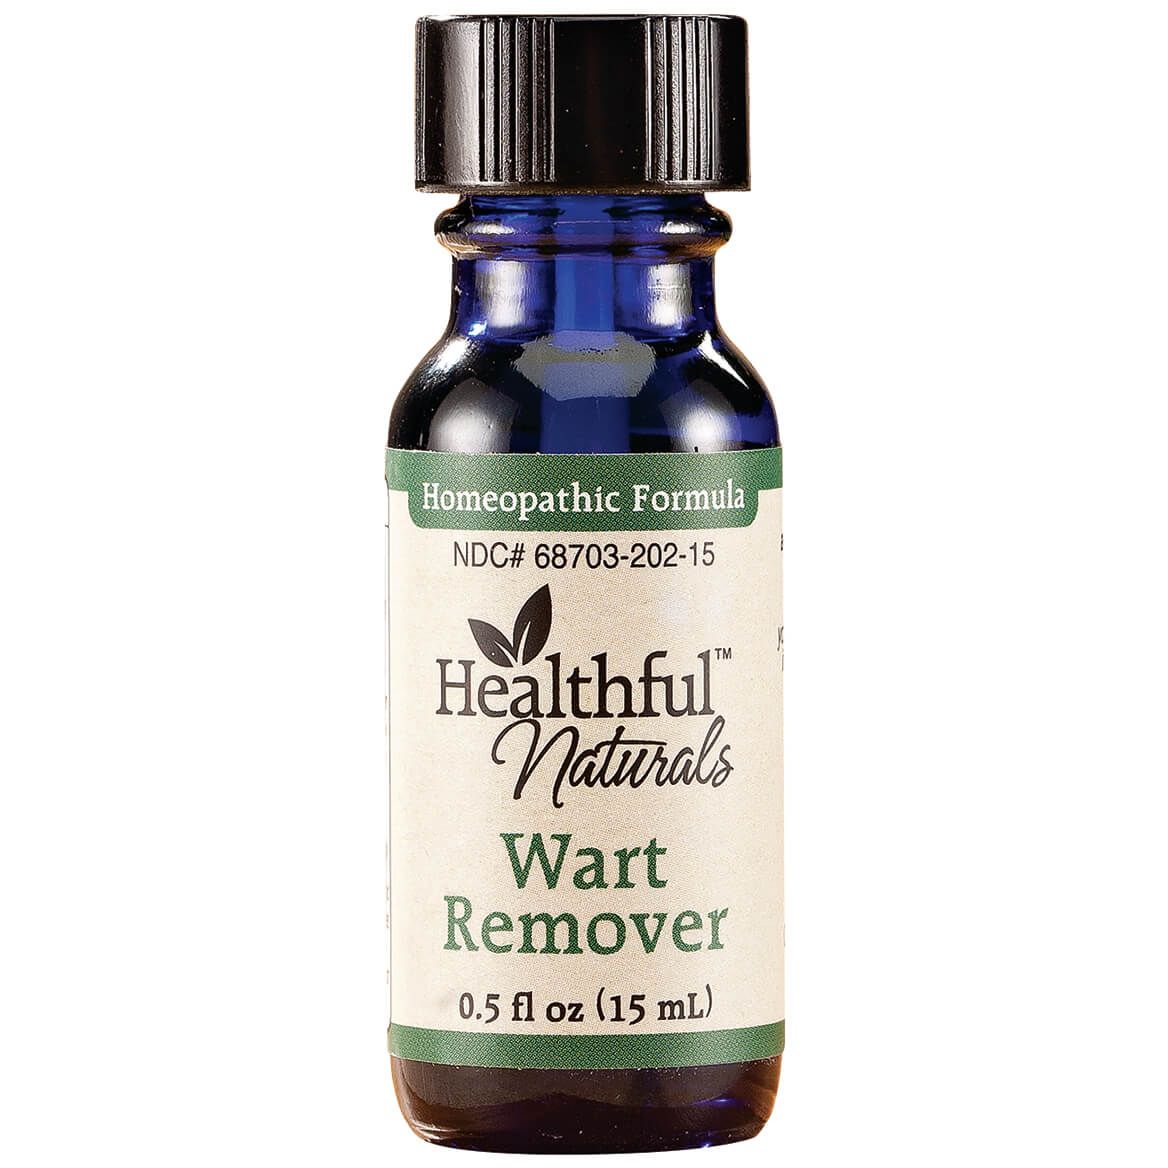 Healthful™ Naturals Wart Remover - 15 ml + '-' + 354505